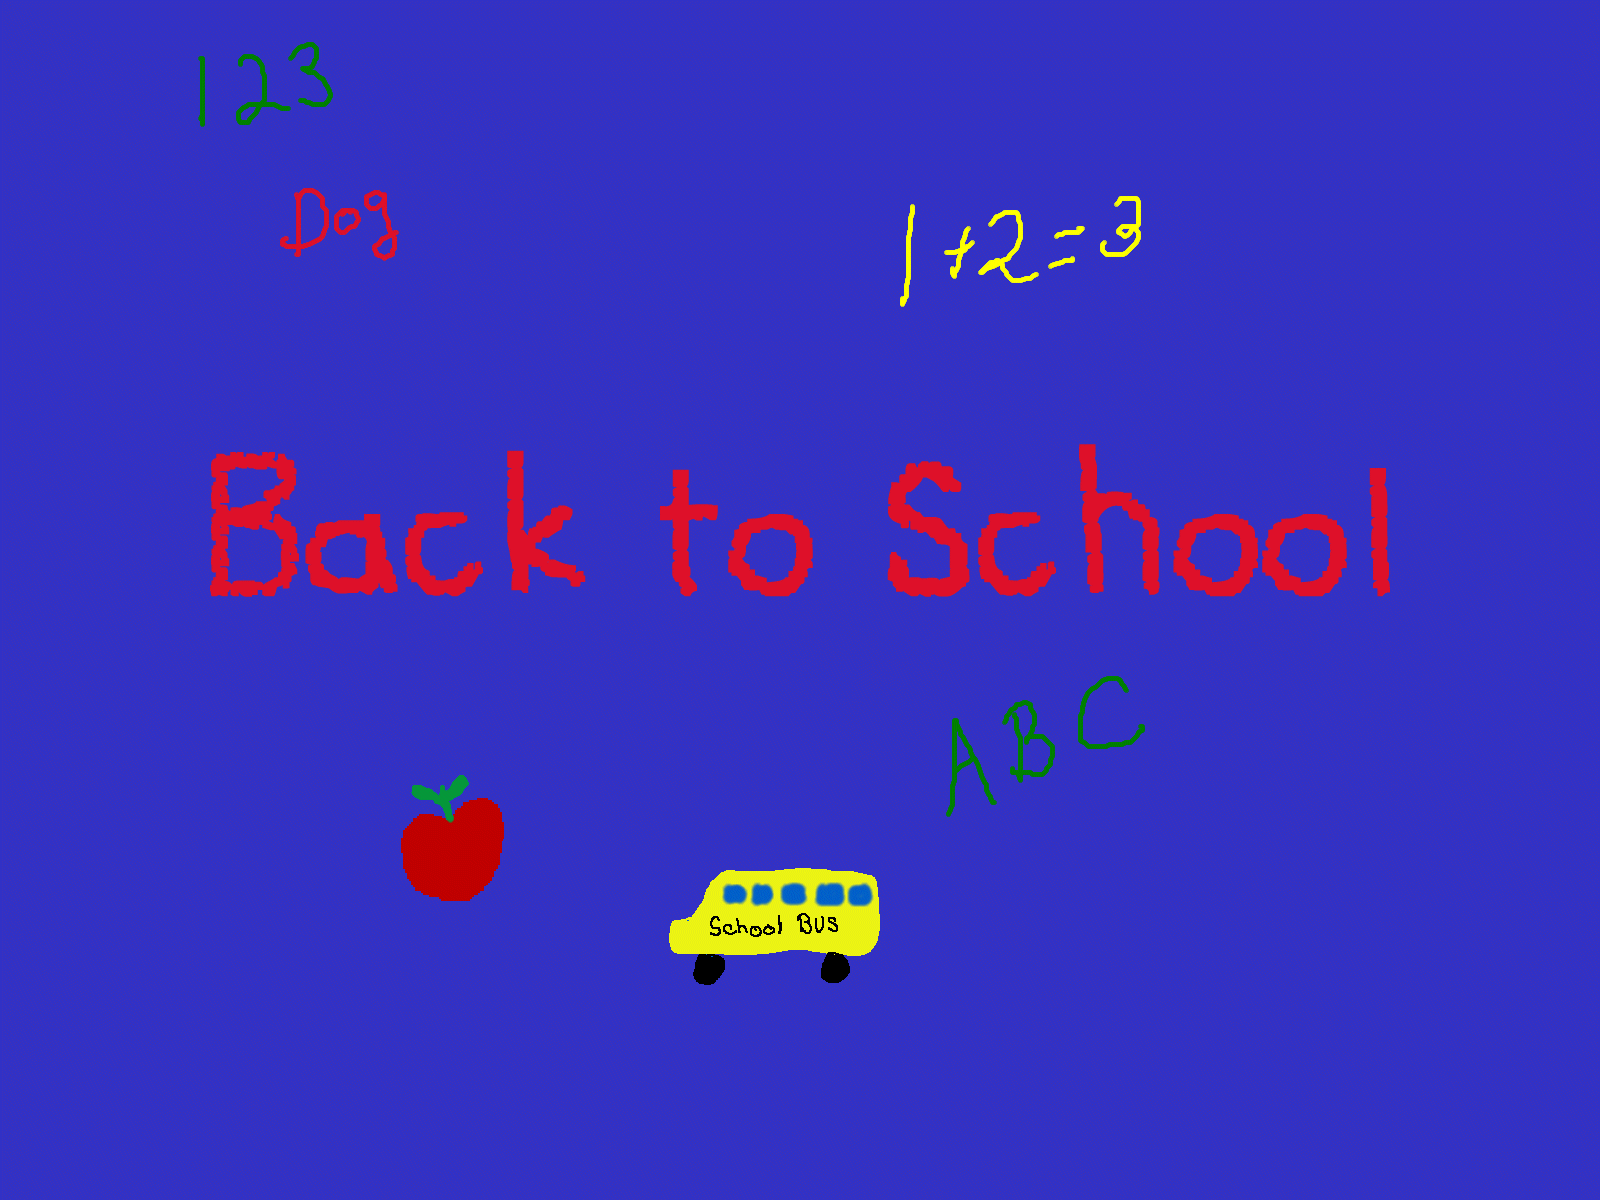 Back to School Wallpaper Background Image for your Desktop